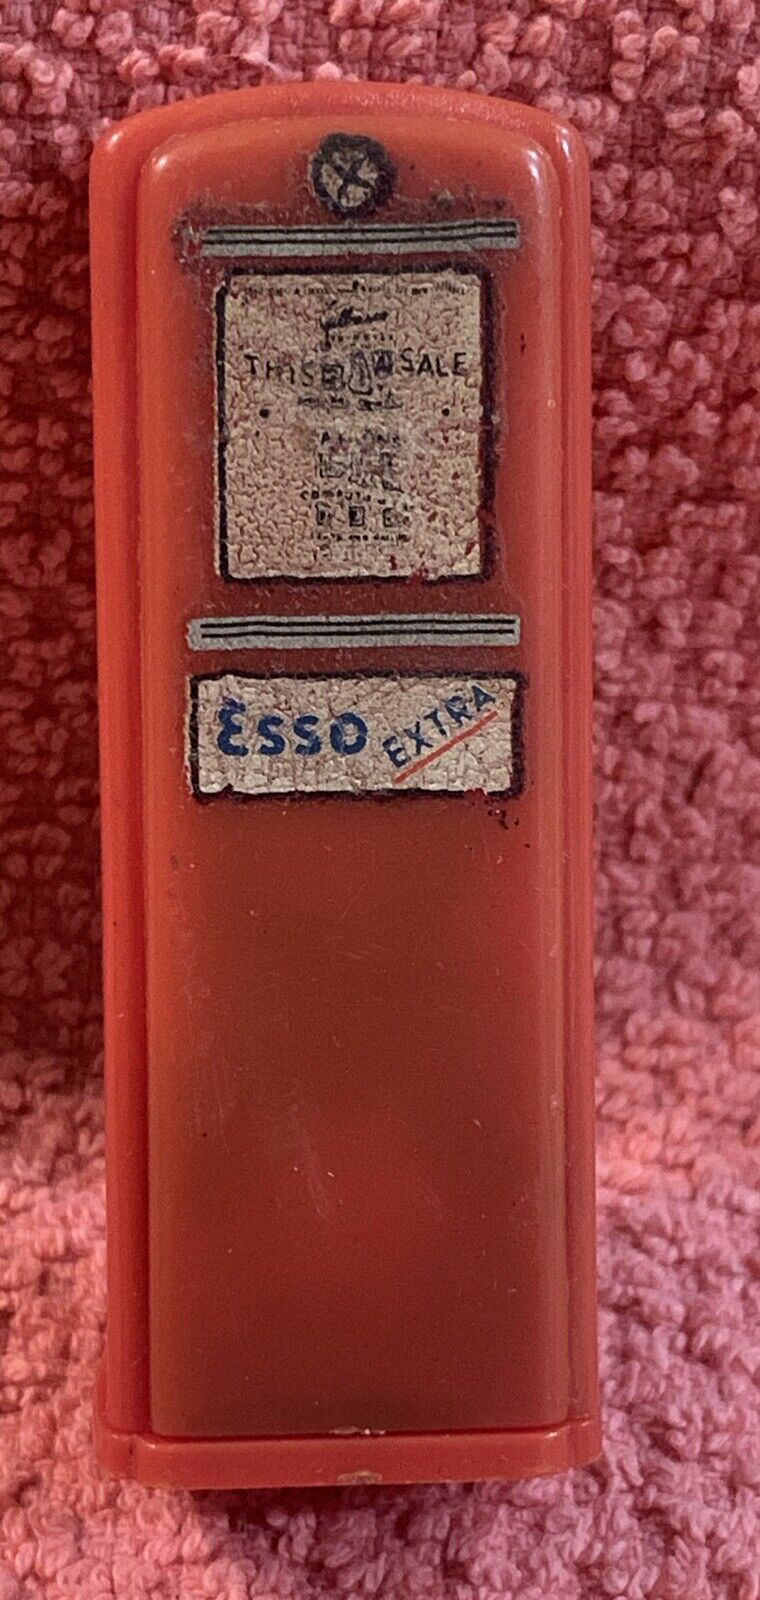 Vintage Esso Oil Gas Pump Red Salt Shaker Shelton Serv Station New Boston Texas